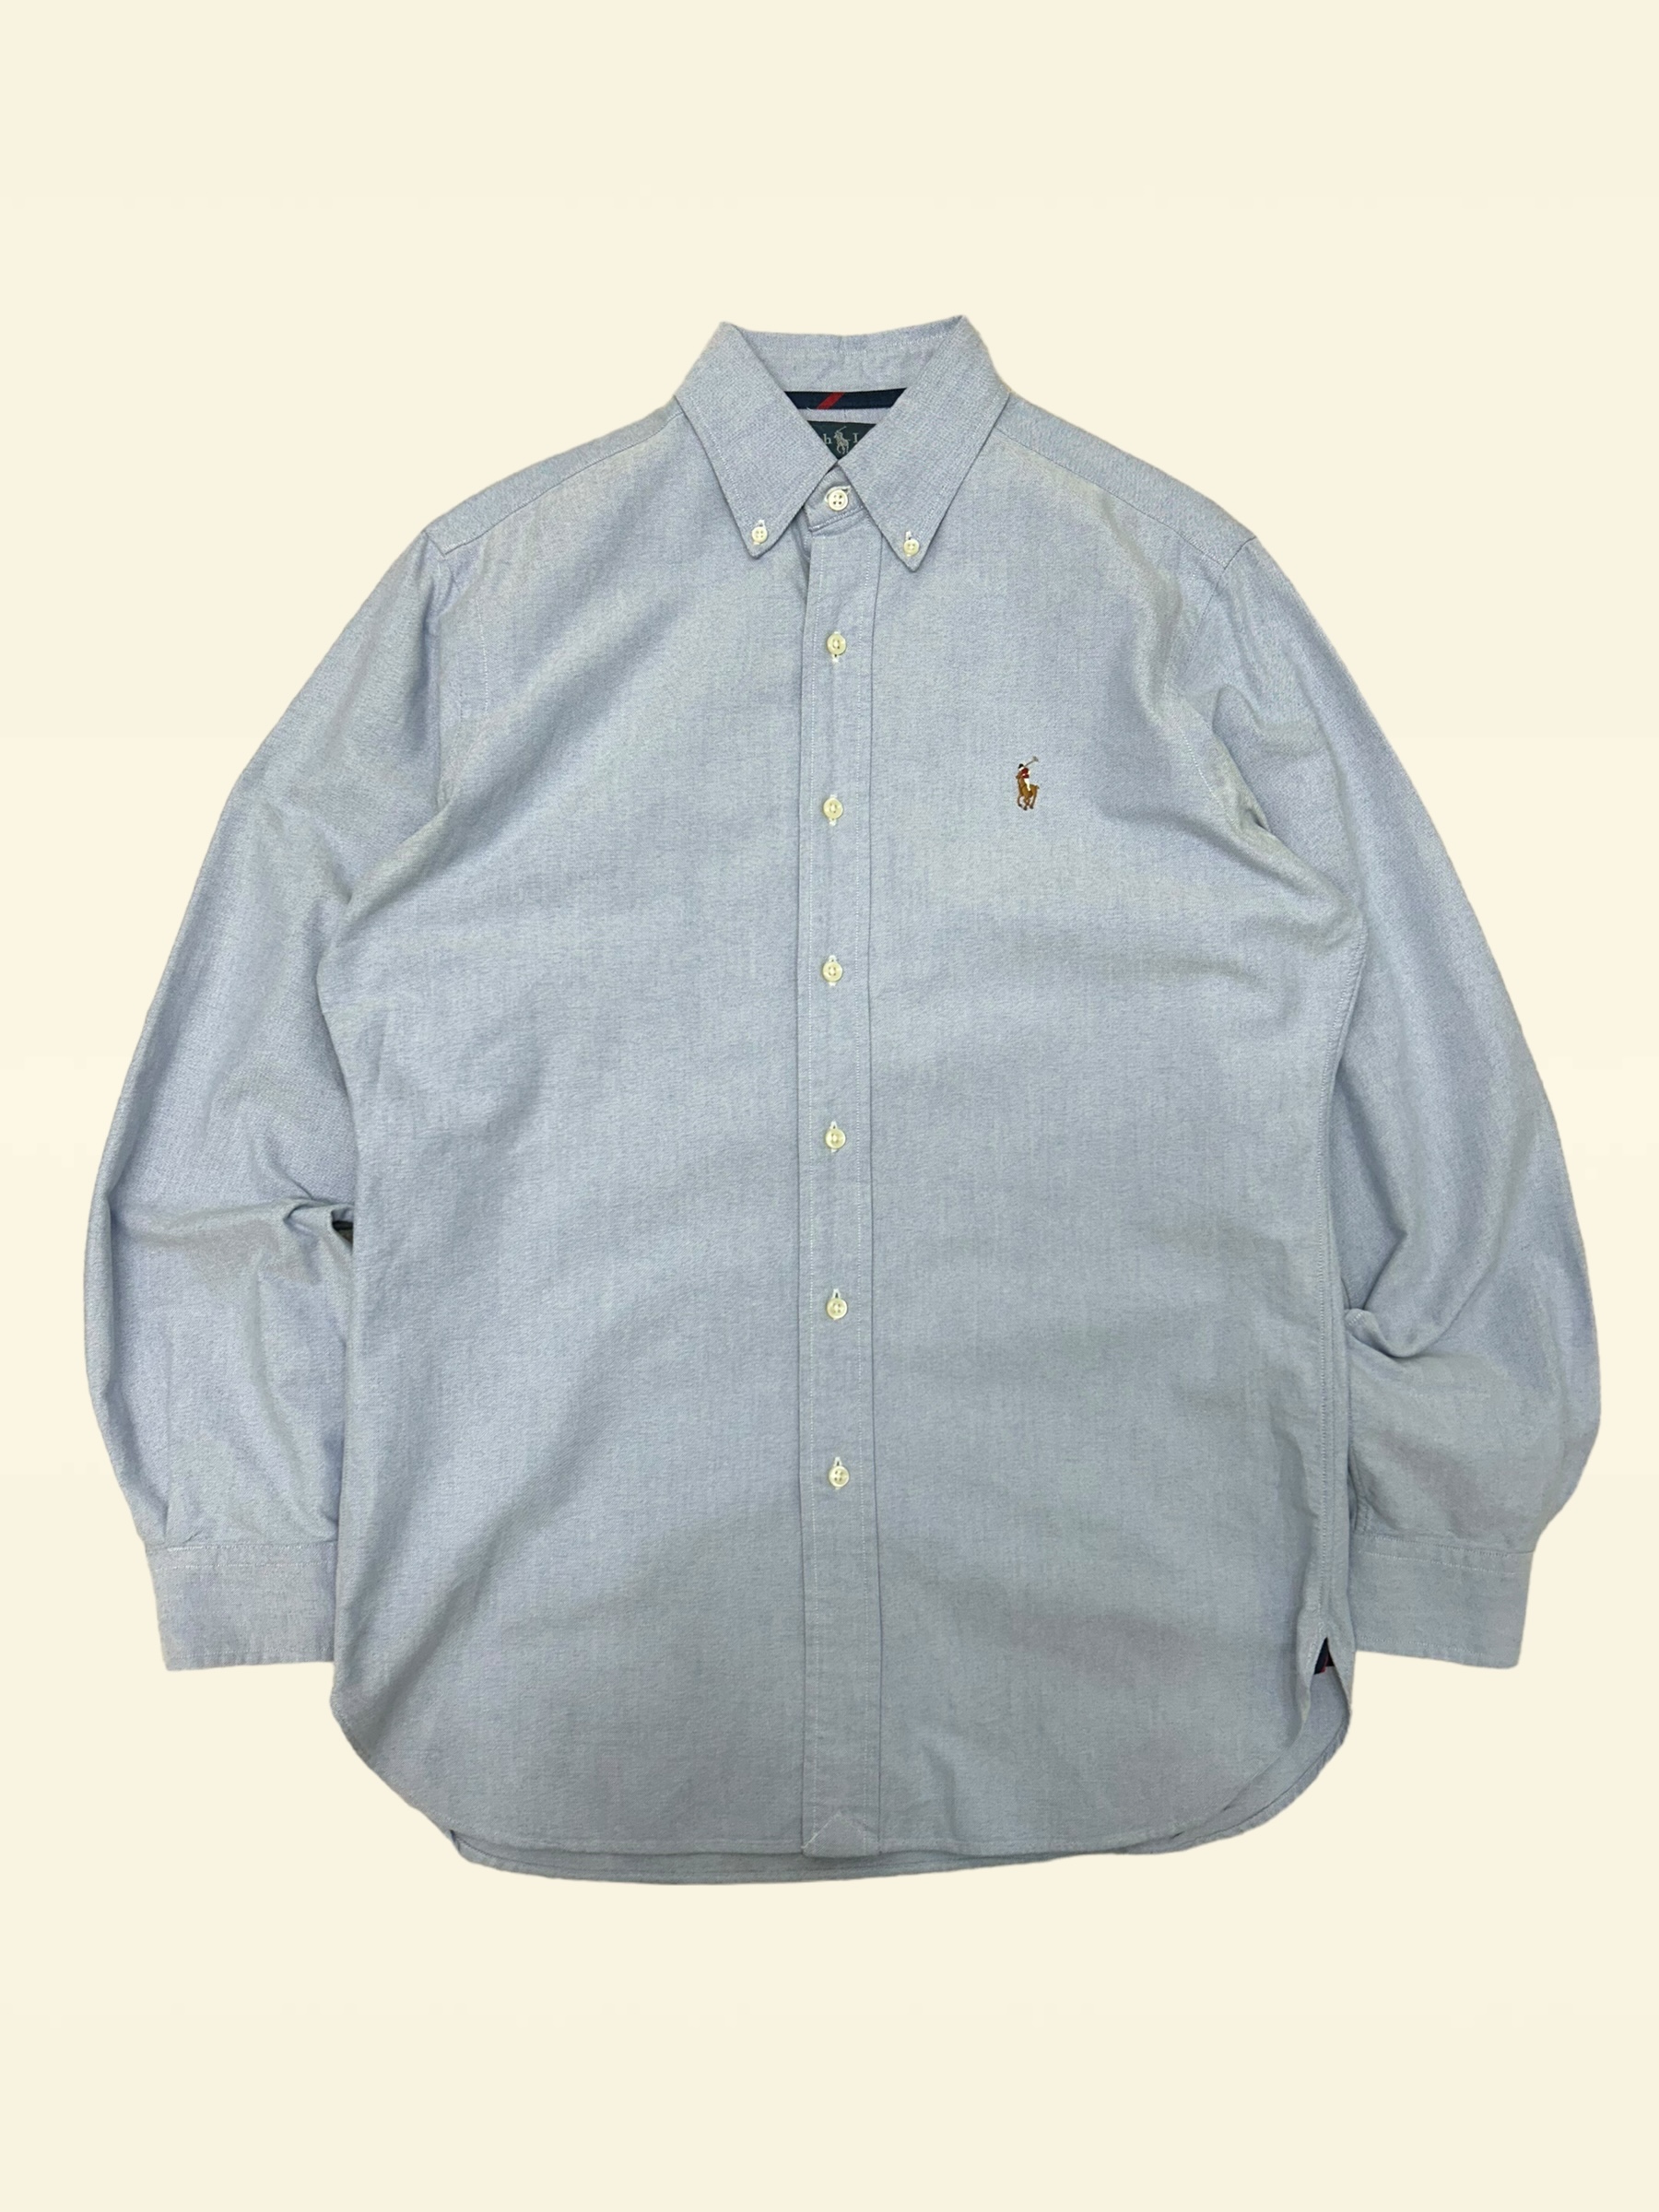 (From USA)Polo ralph lauren blue oxford shirt S